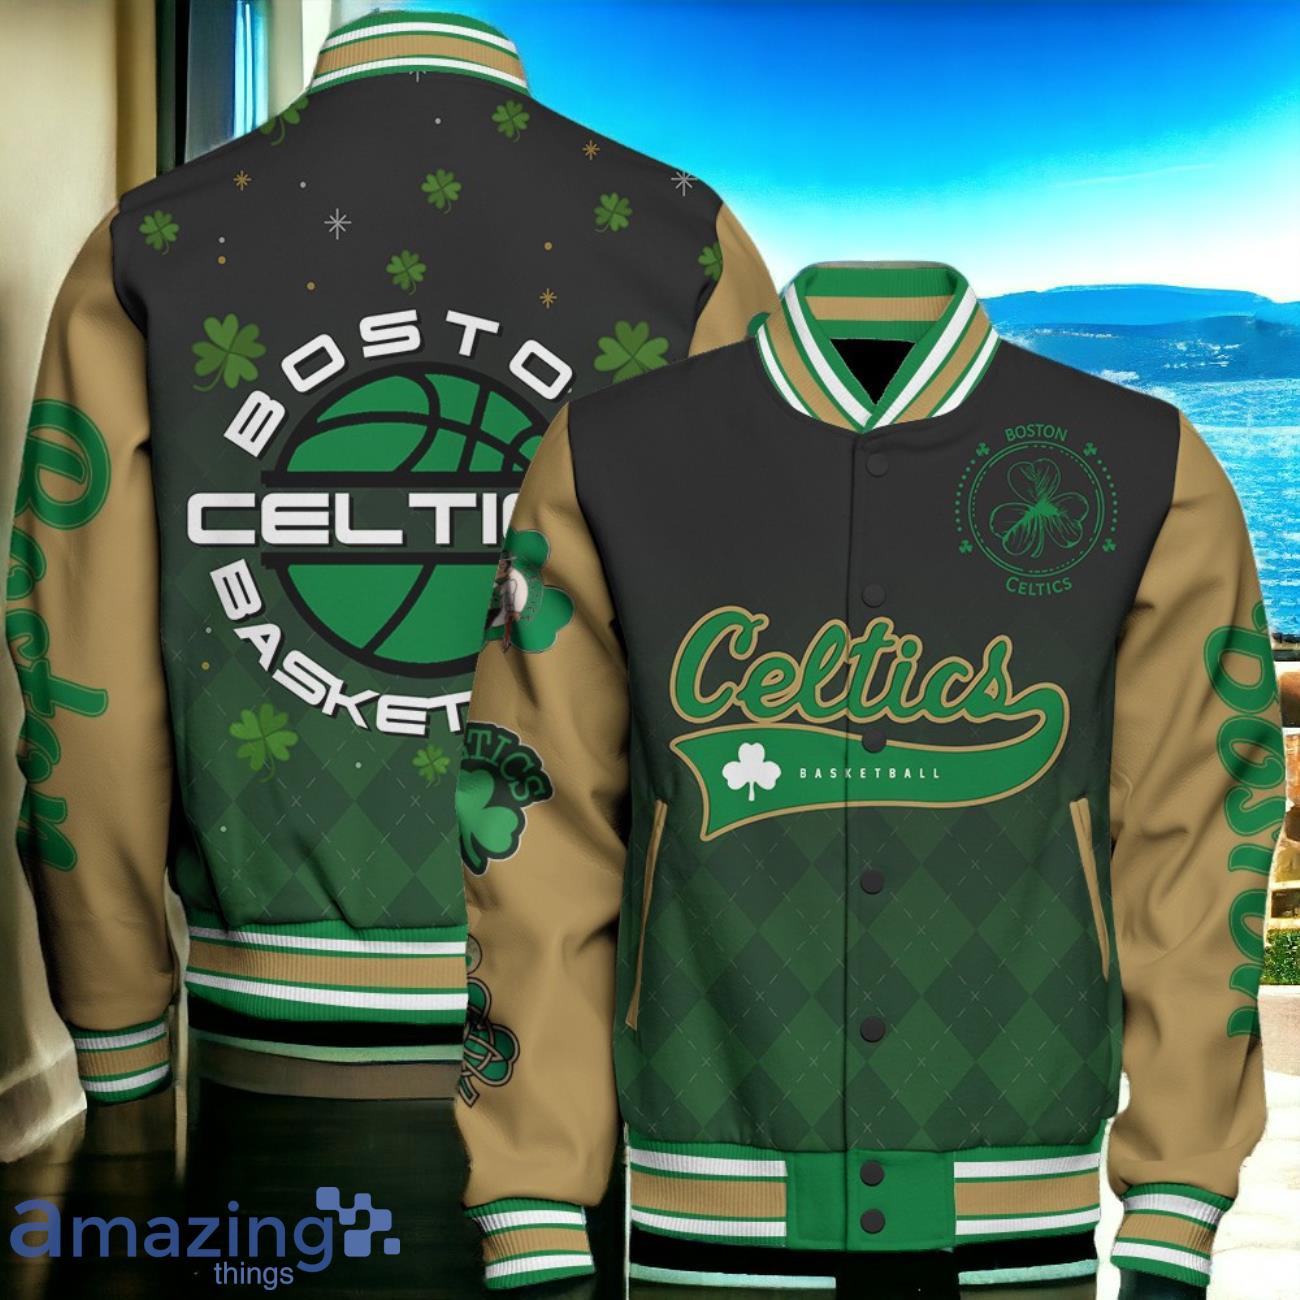 Boston Celtics Basketball Patrick's Day Art Design New Baseball Jacket Product Photo 1